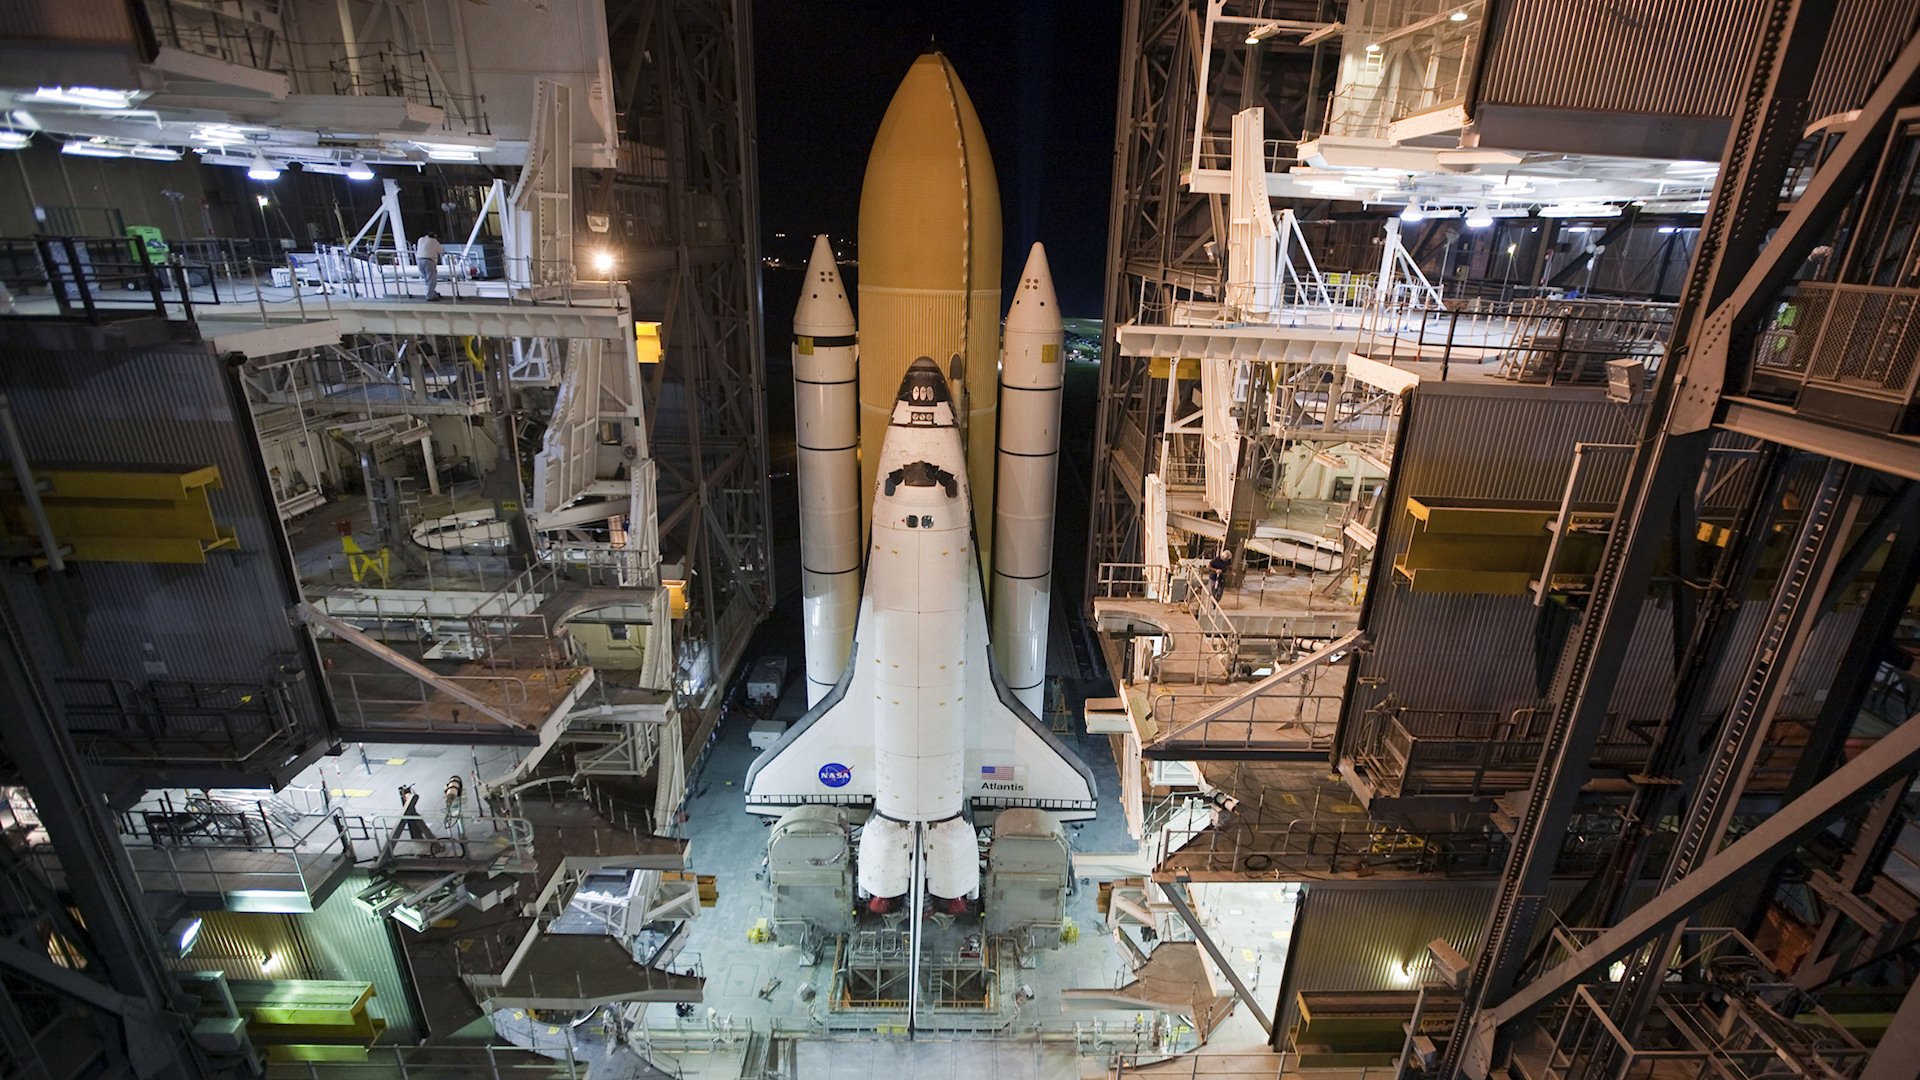 space shuttle, vehicles, nasa, space shuttle atlantis